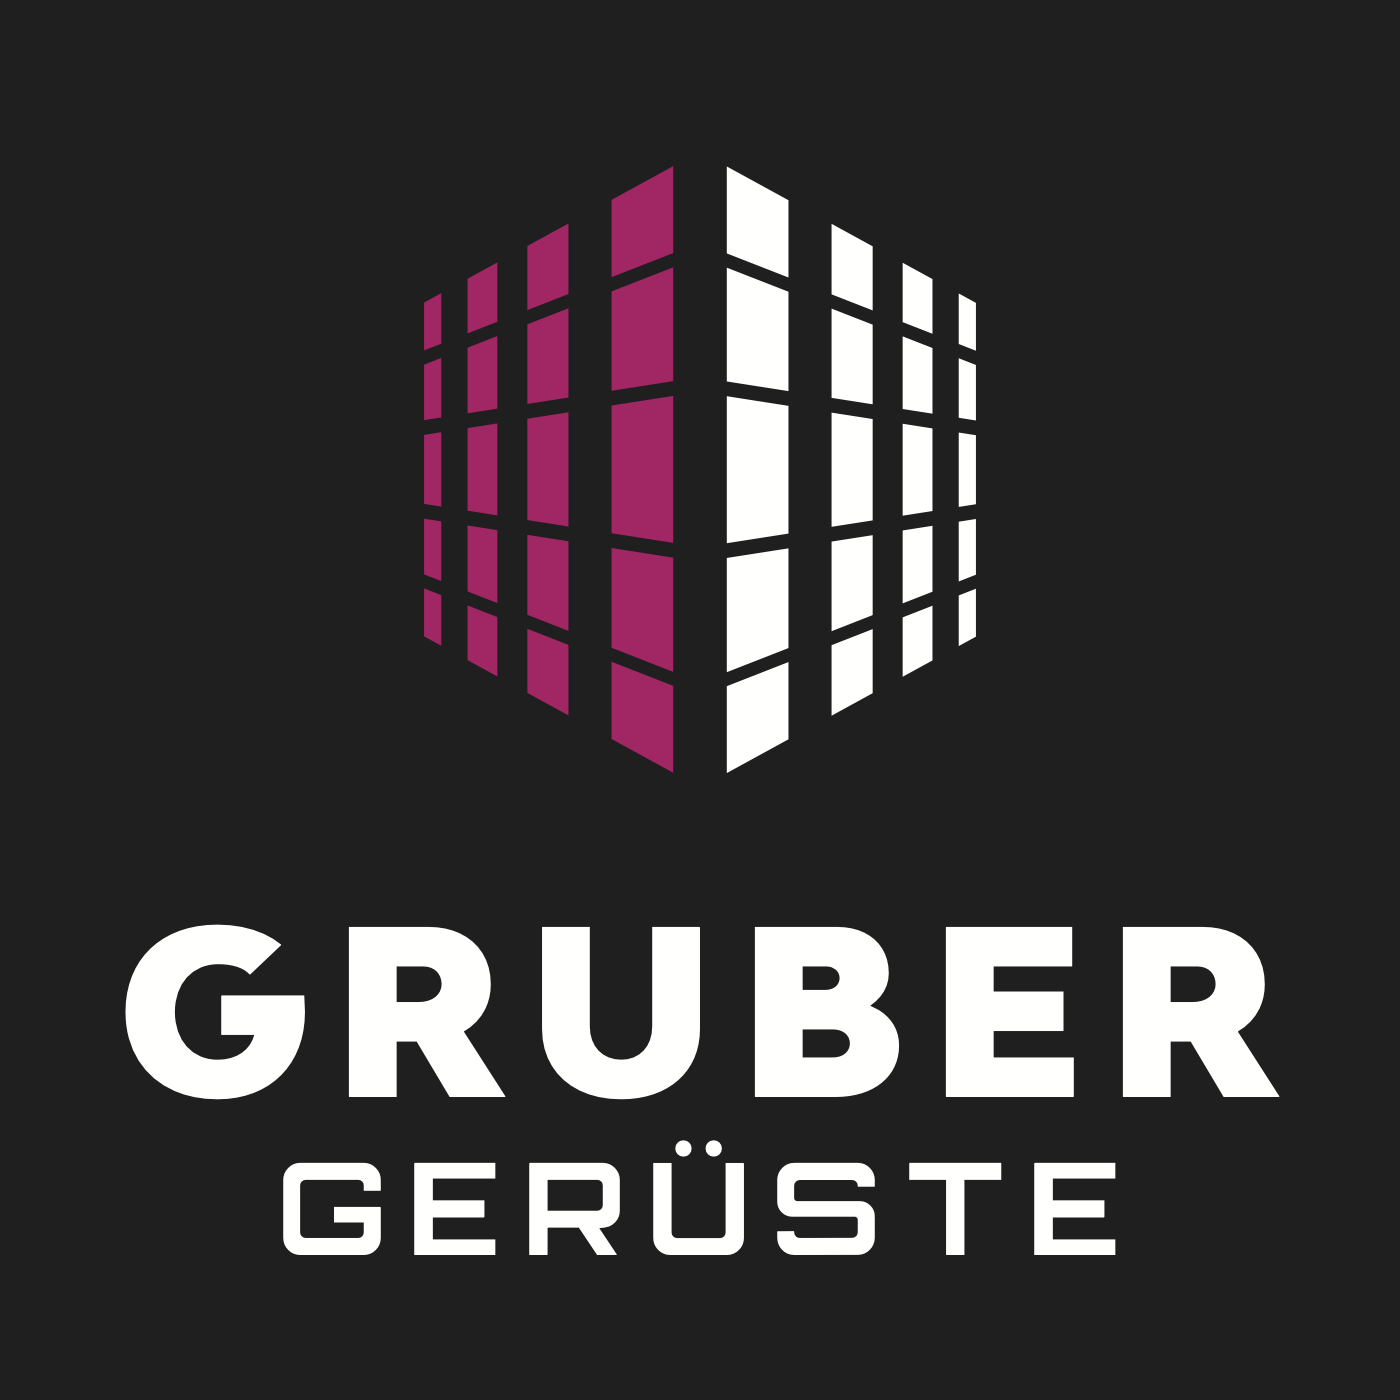 Traum_gruber_logo_final.png